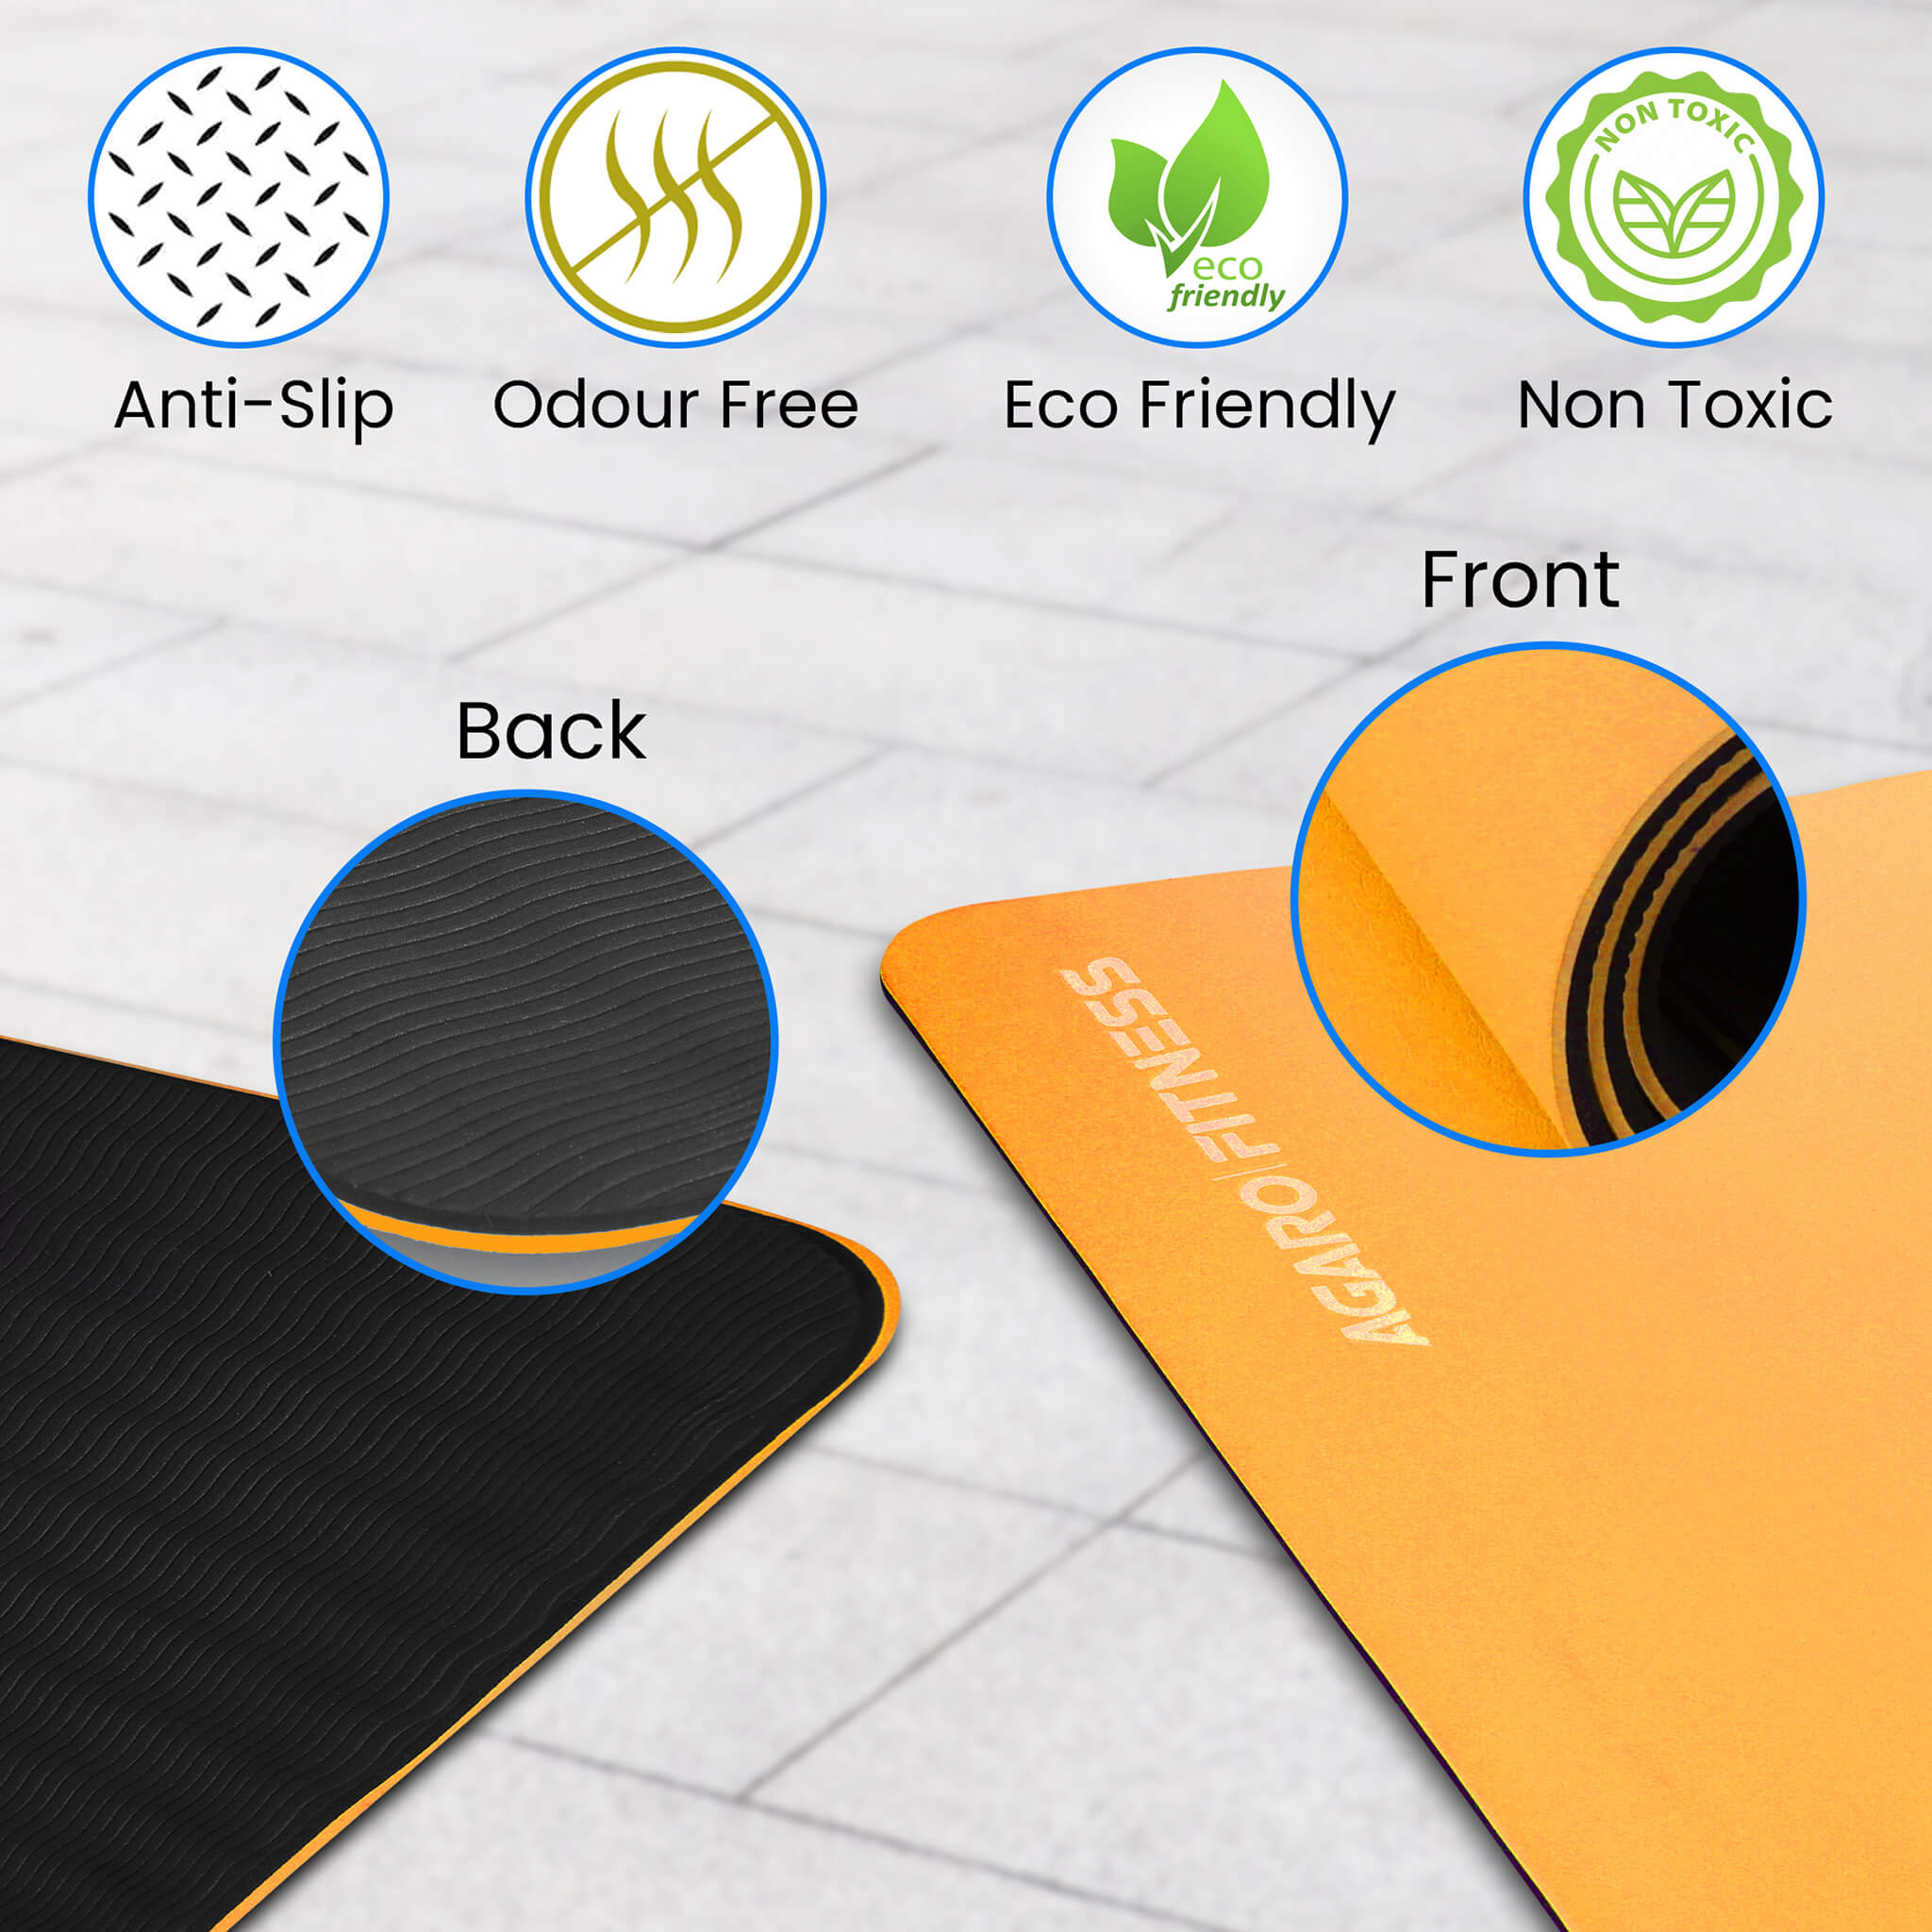 Ultra Thin Portable Proiron Yoga Mat Waterproof, Durable, Non Slip